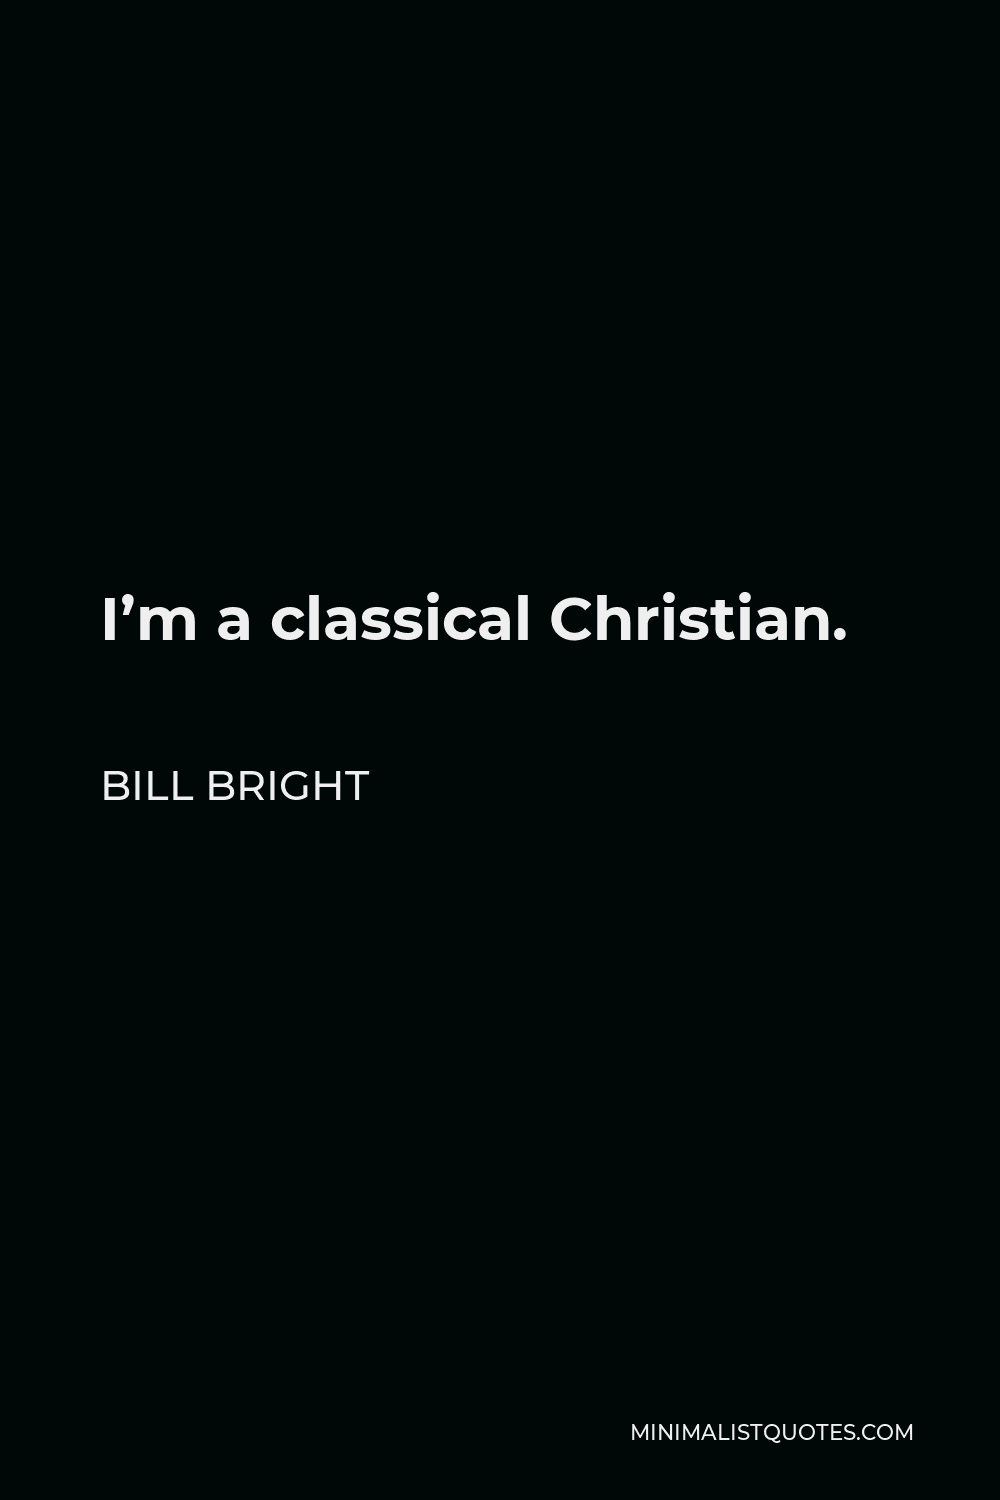 Bill Bright Quote - I’m a classical Christian.